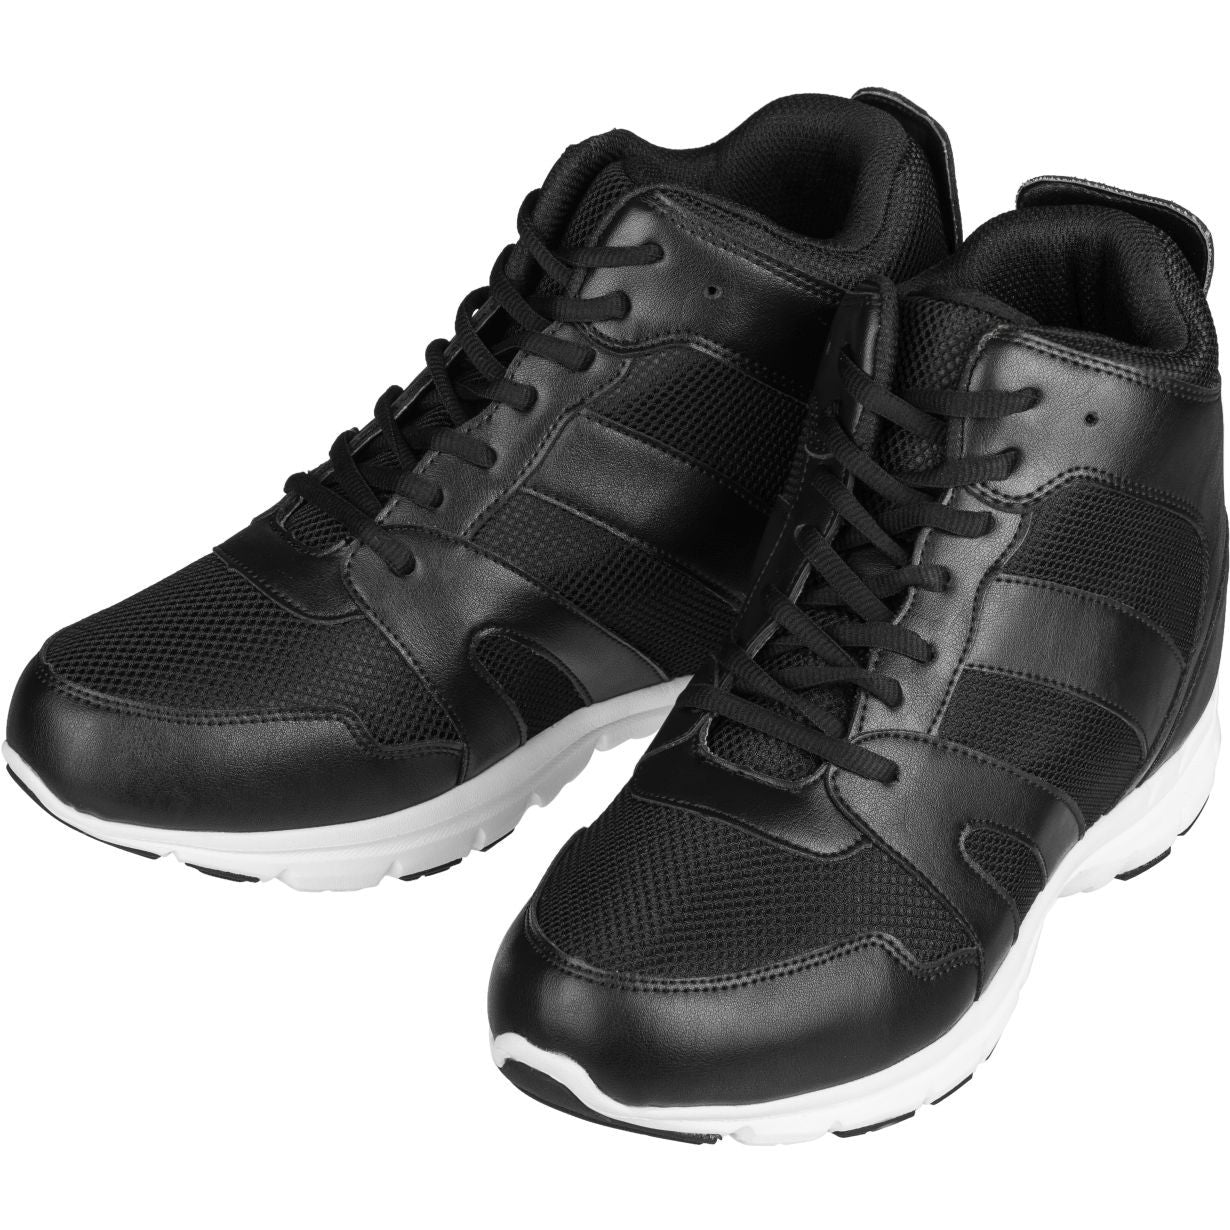 Elevator shoes height increase CALTO 4-Inch Taller Men's Black Elevator Sneakers